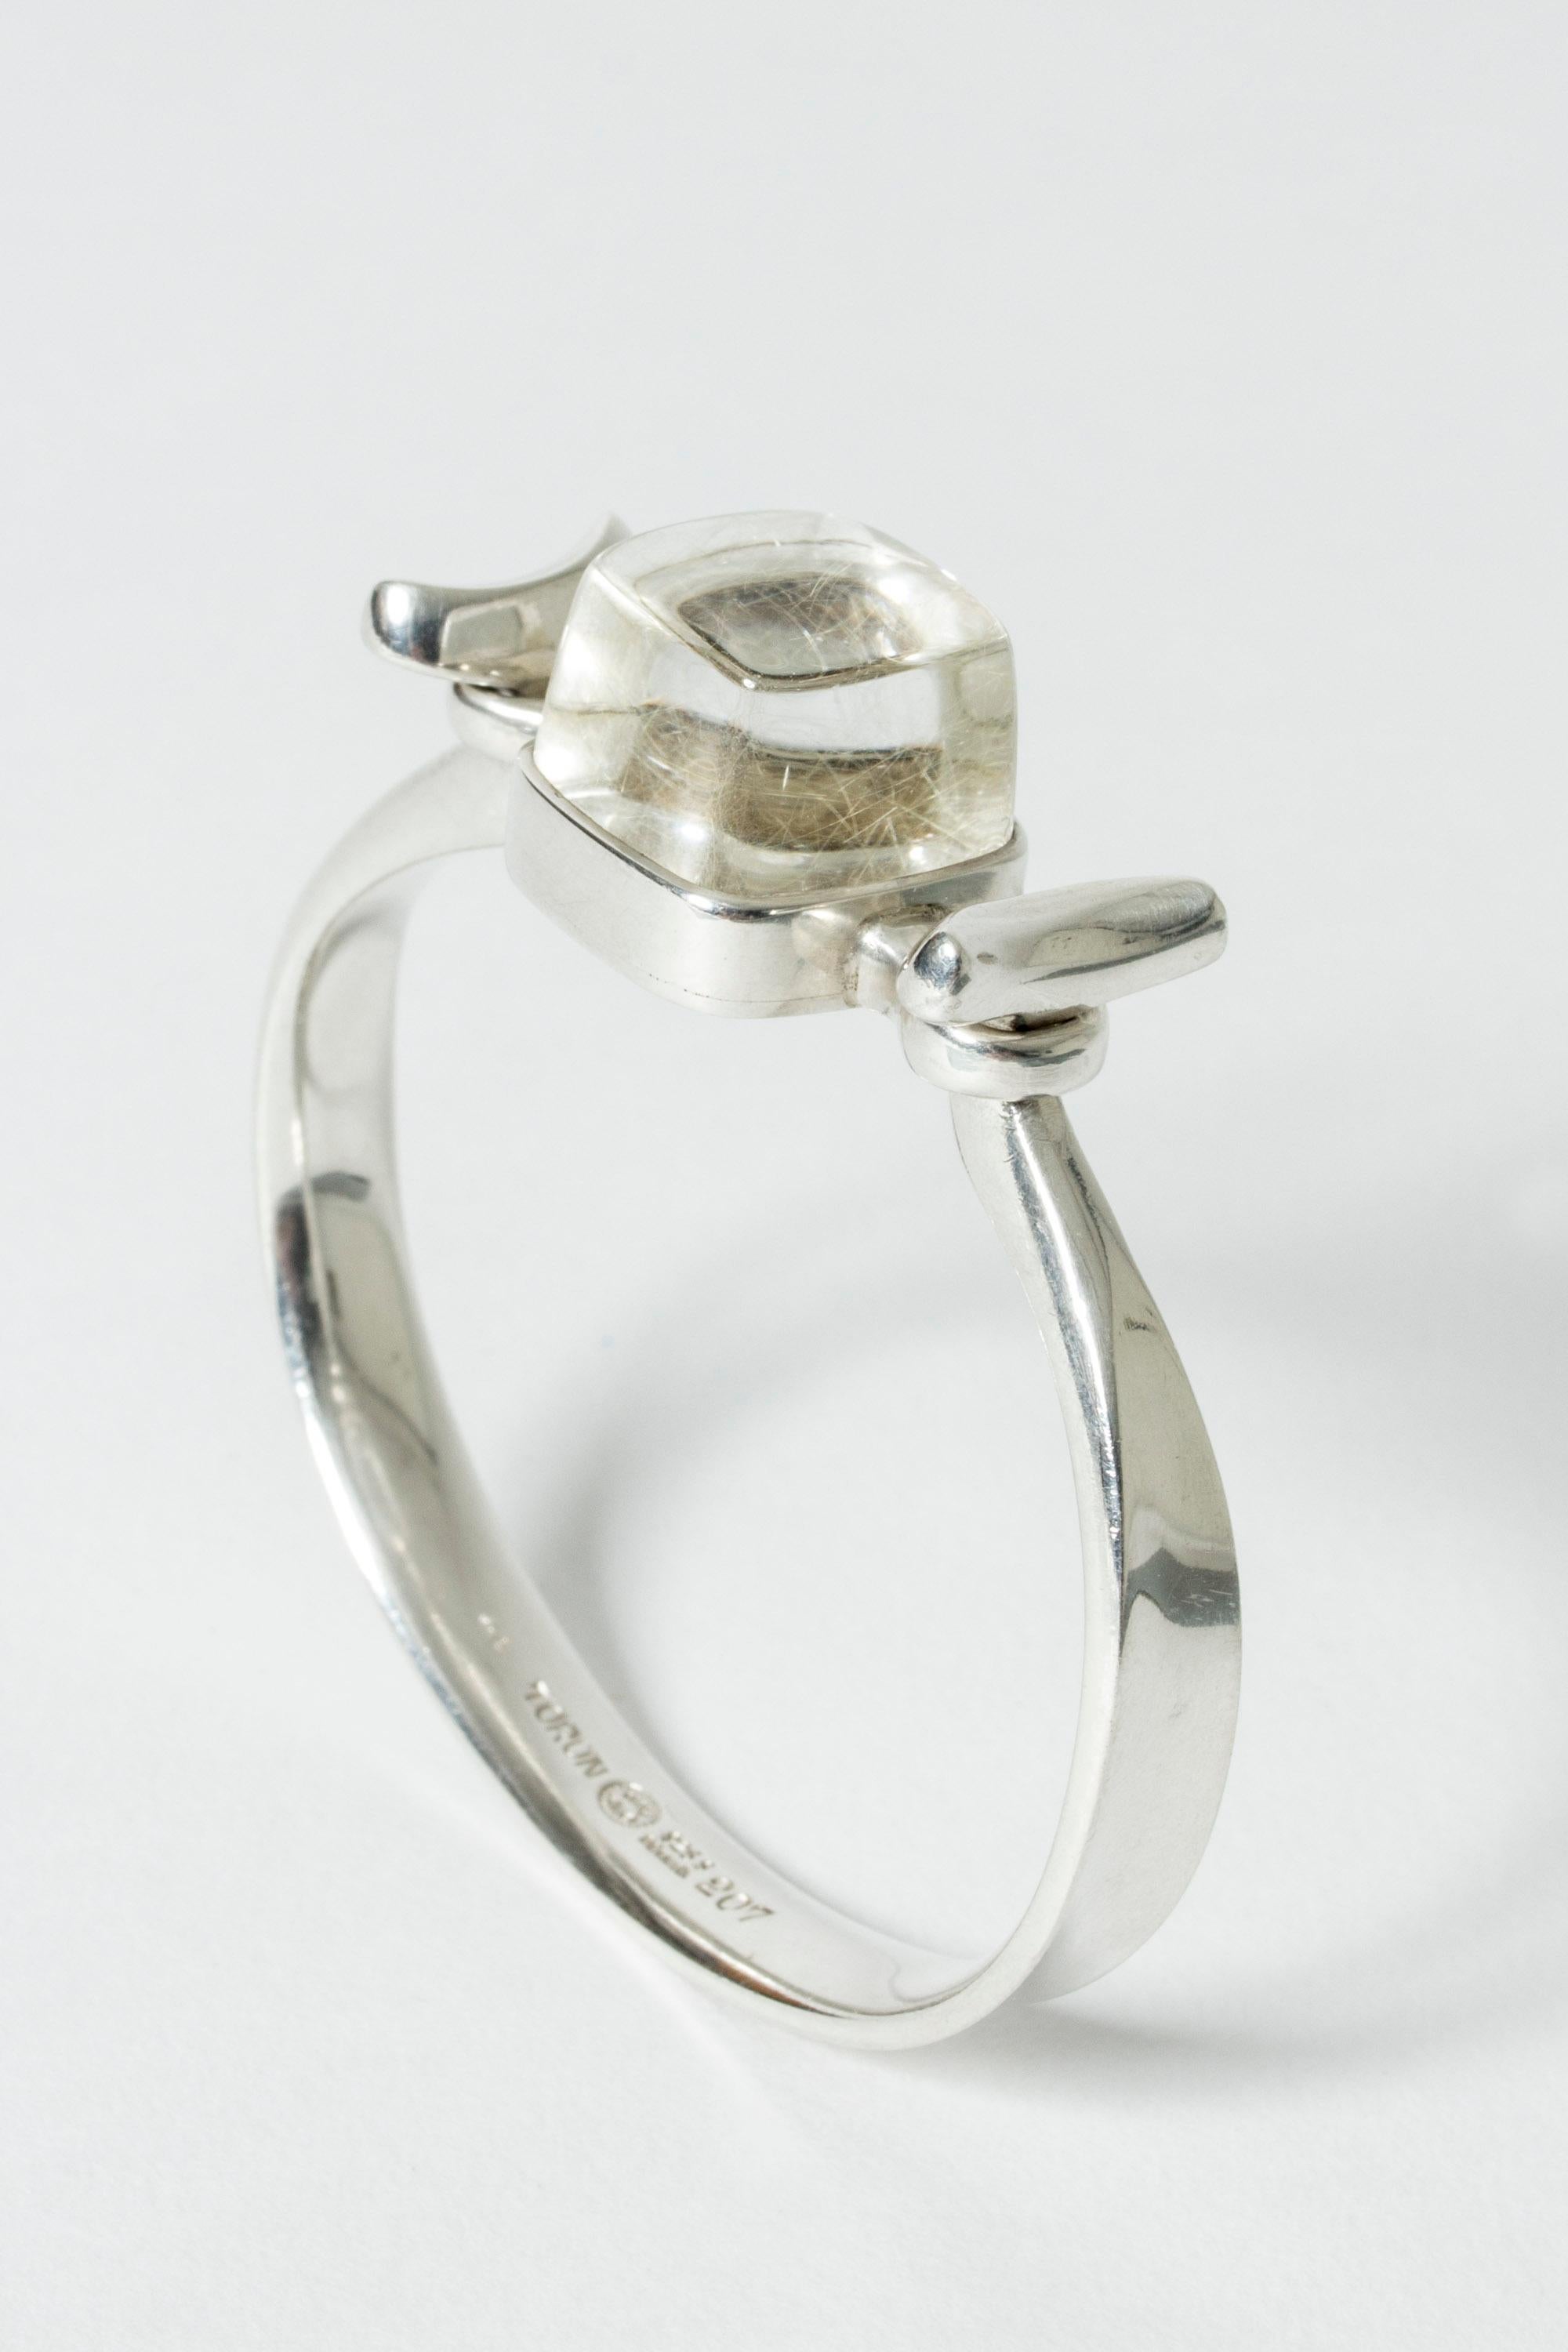 Modernist Silver and Rutilated Quartz Bracelet by Torun Bülow-Hübe for Georg Jensen